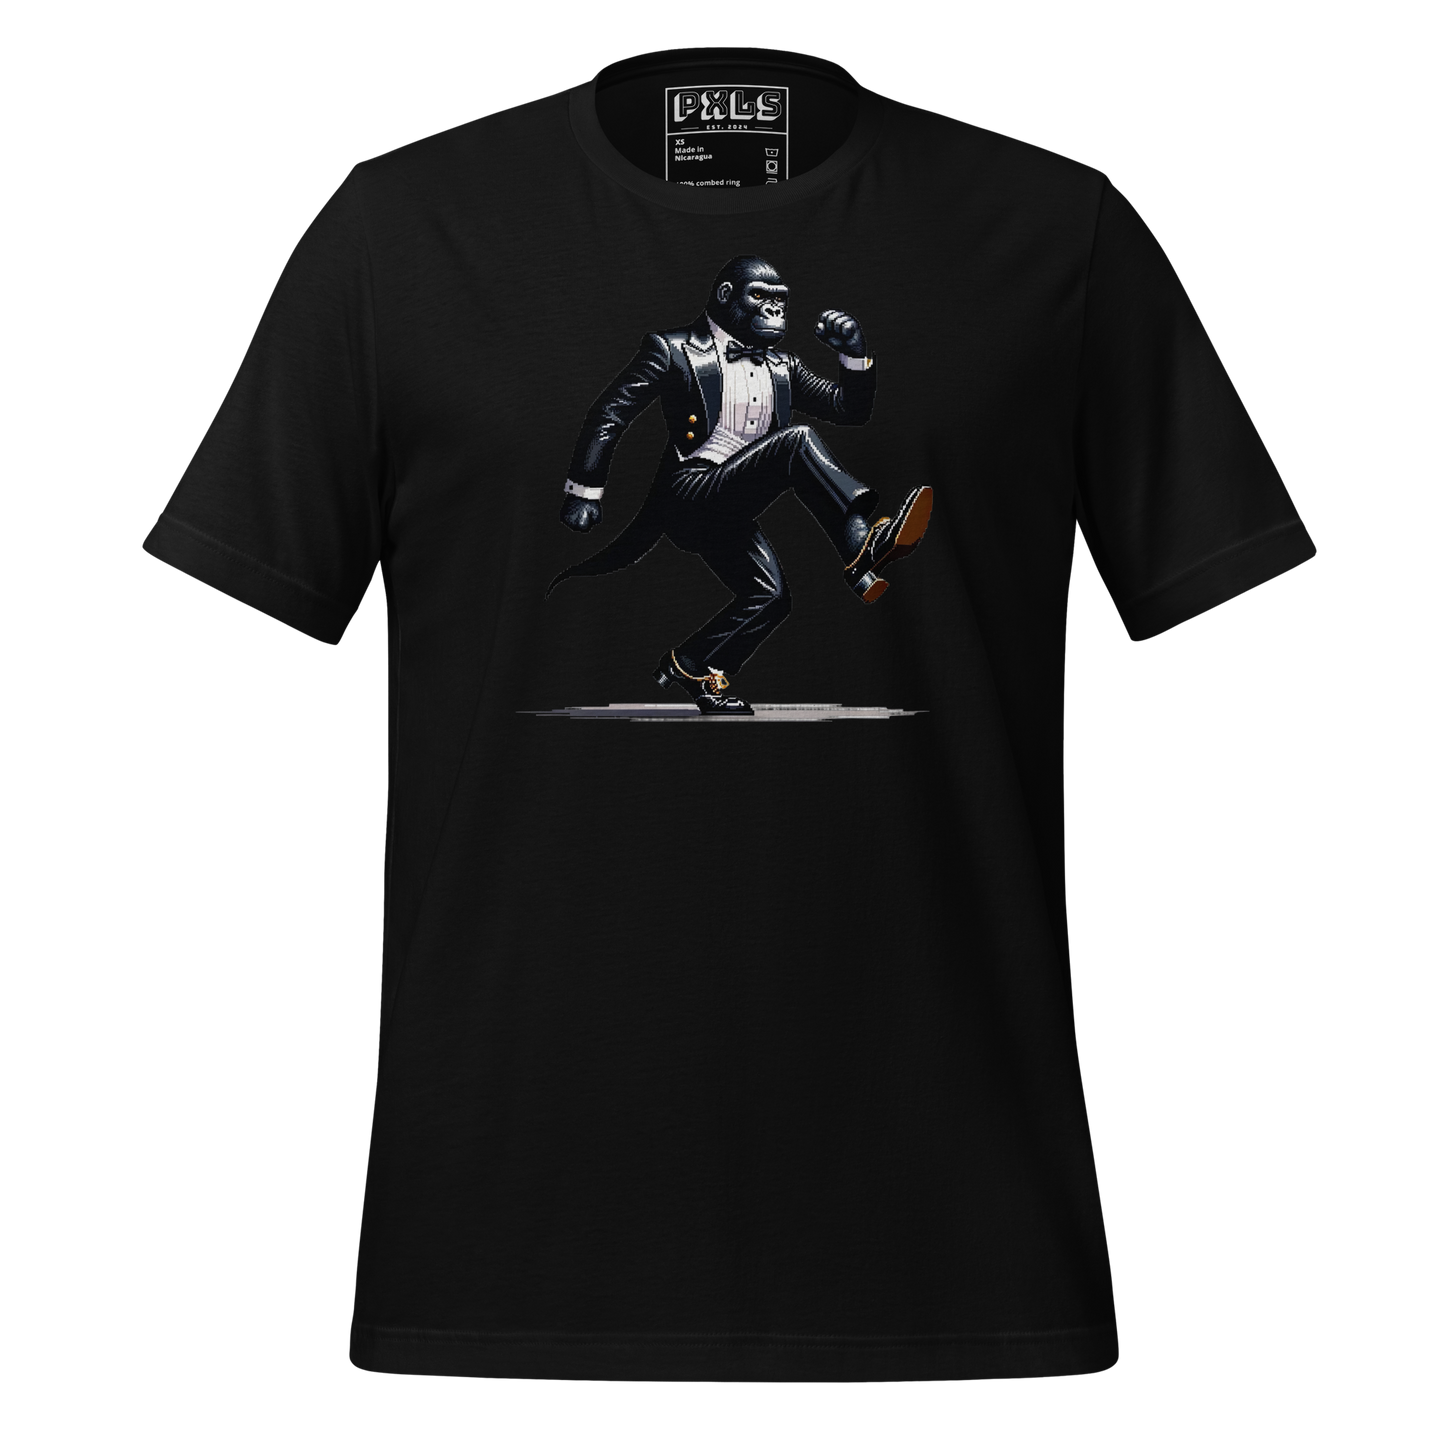 "Tap Dancing Gorilla" Unisex Shirt